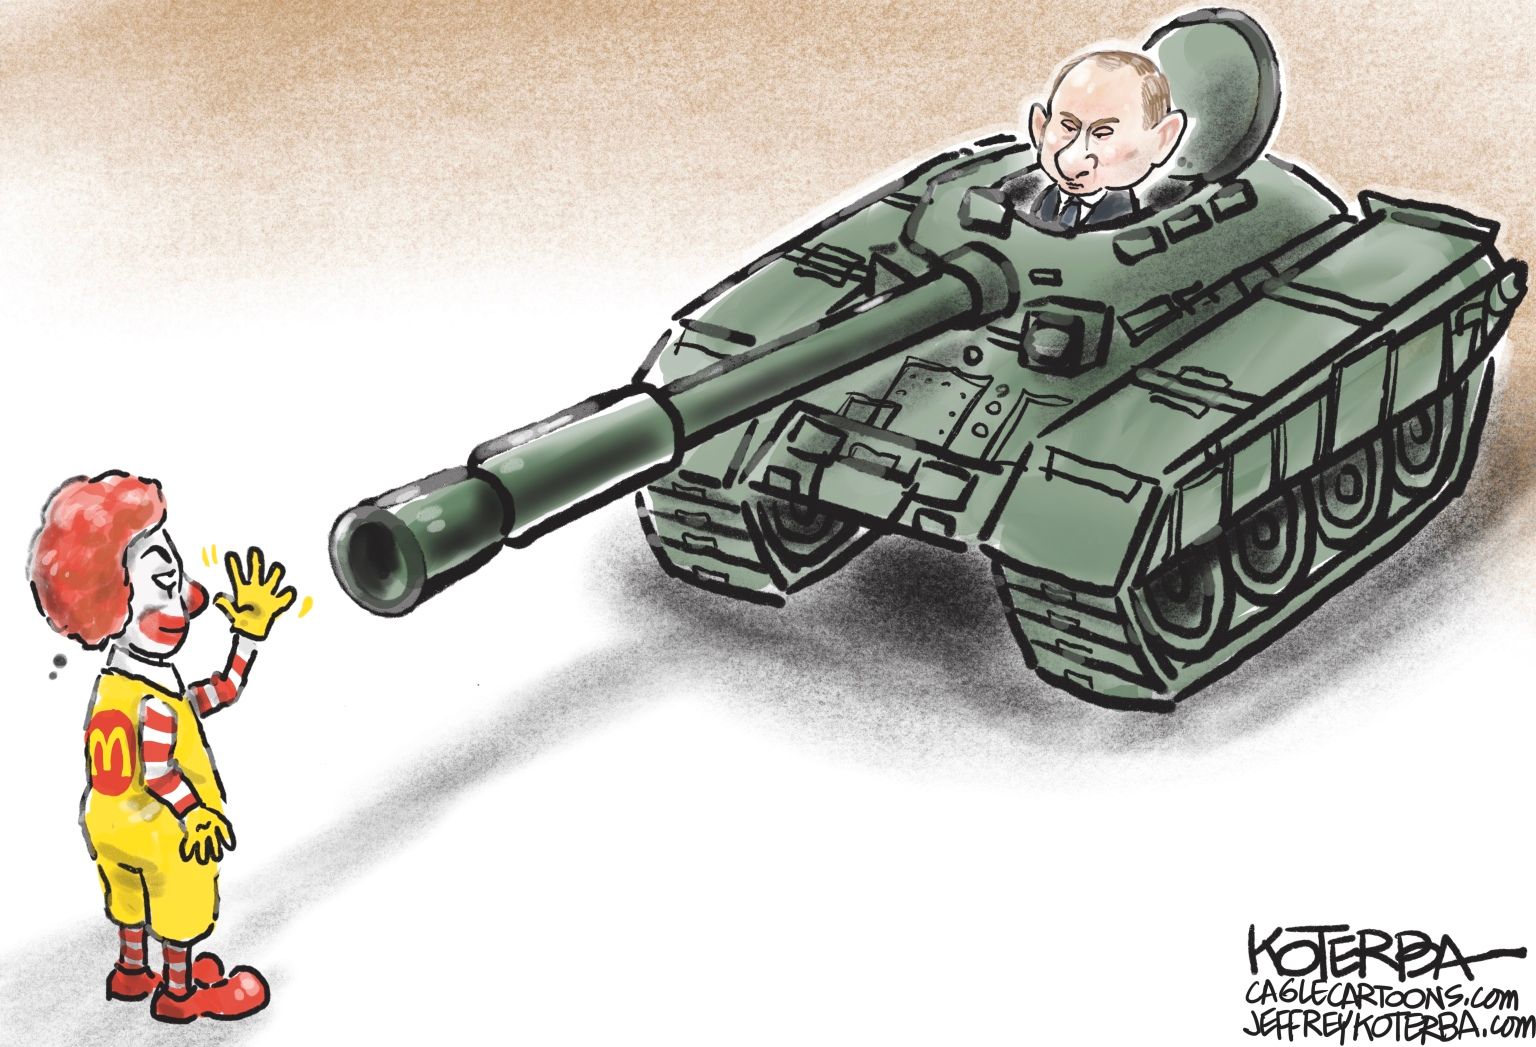 McDonalds Leaves Russia | Political Cartoon